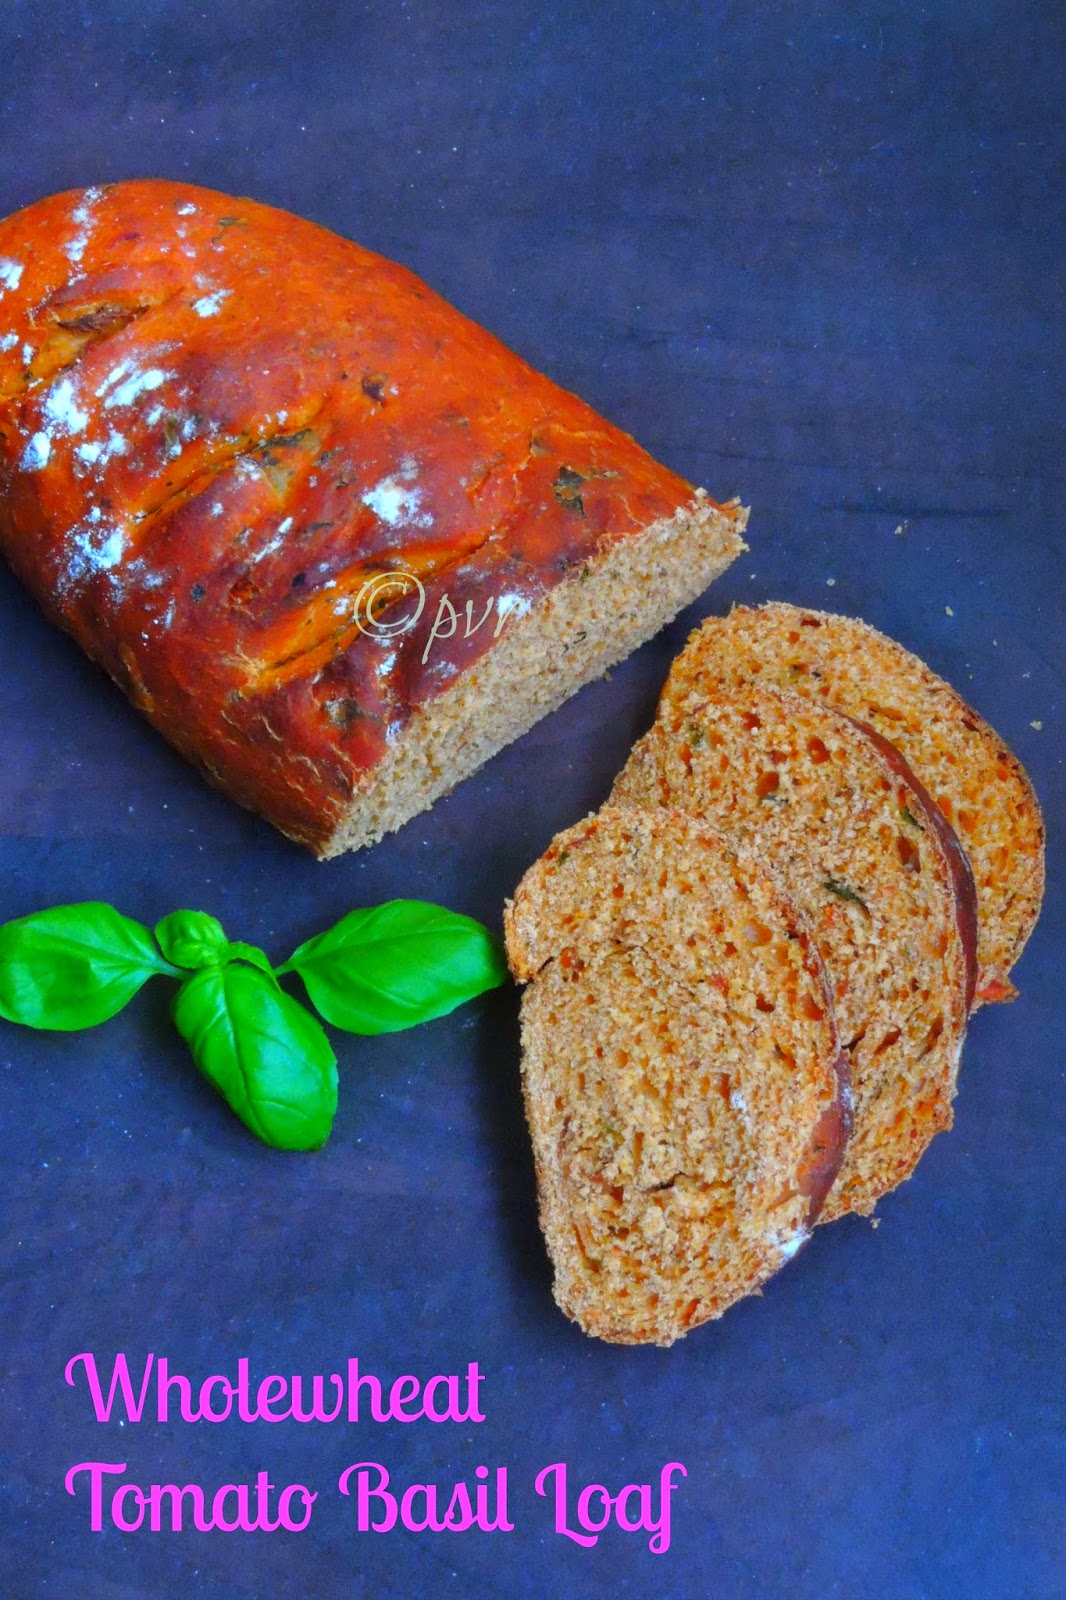 Tomato basil loaf, wholewheat Tomato Basil Loaf